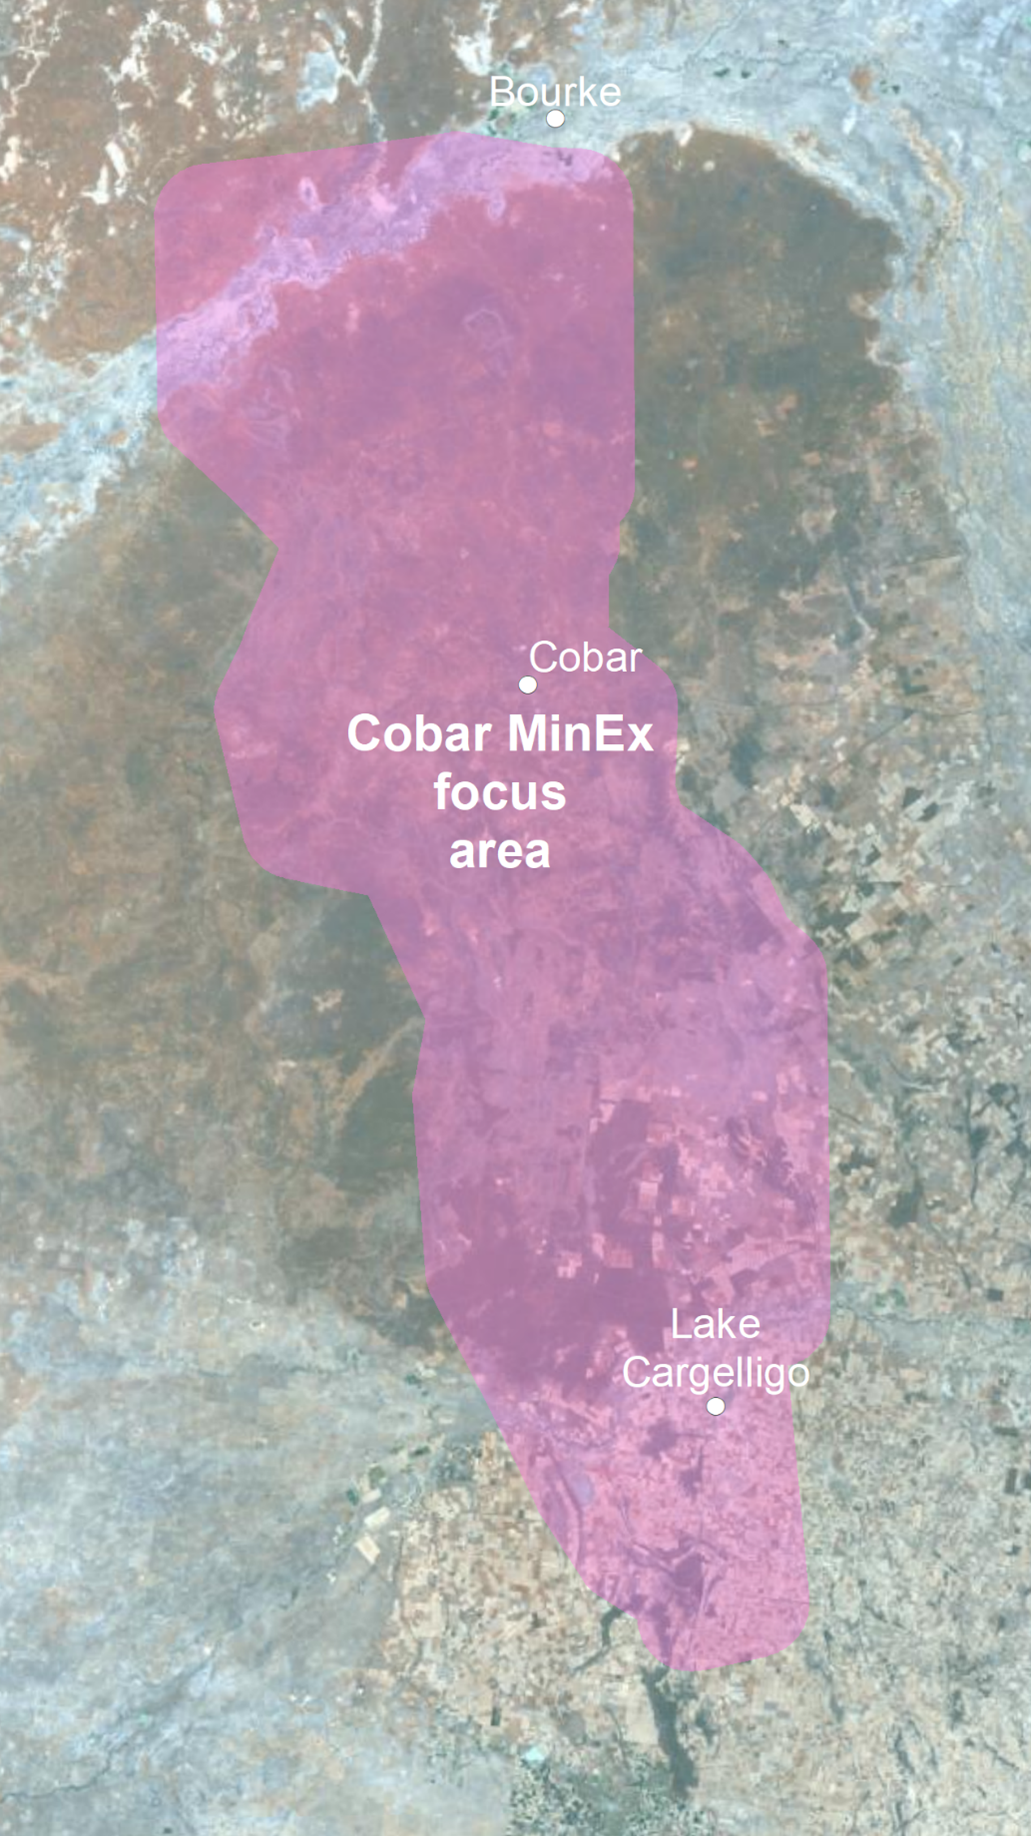 Location map of the Cobar MinEx focus area